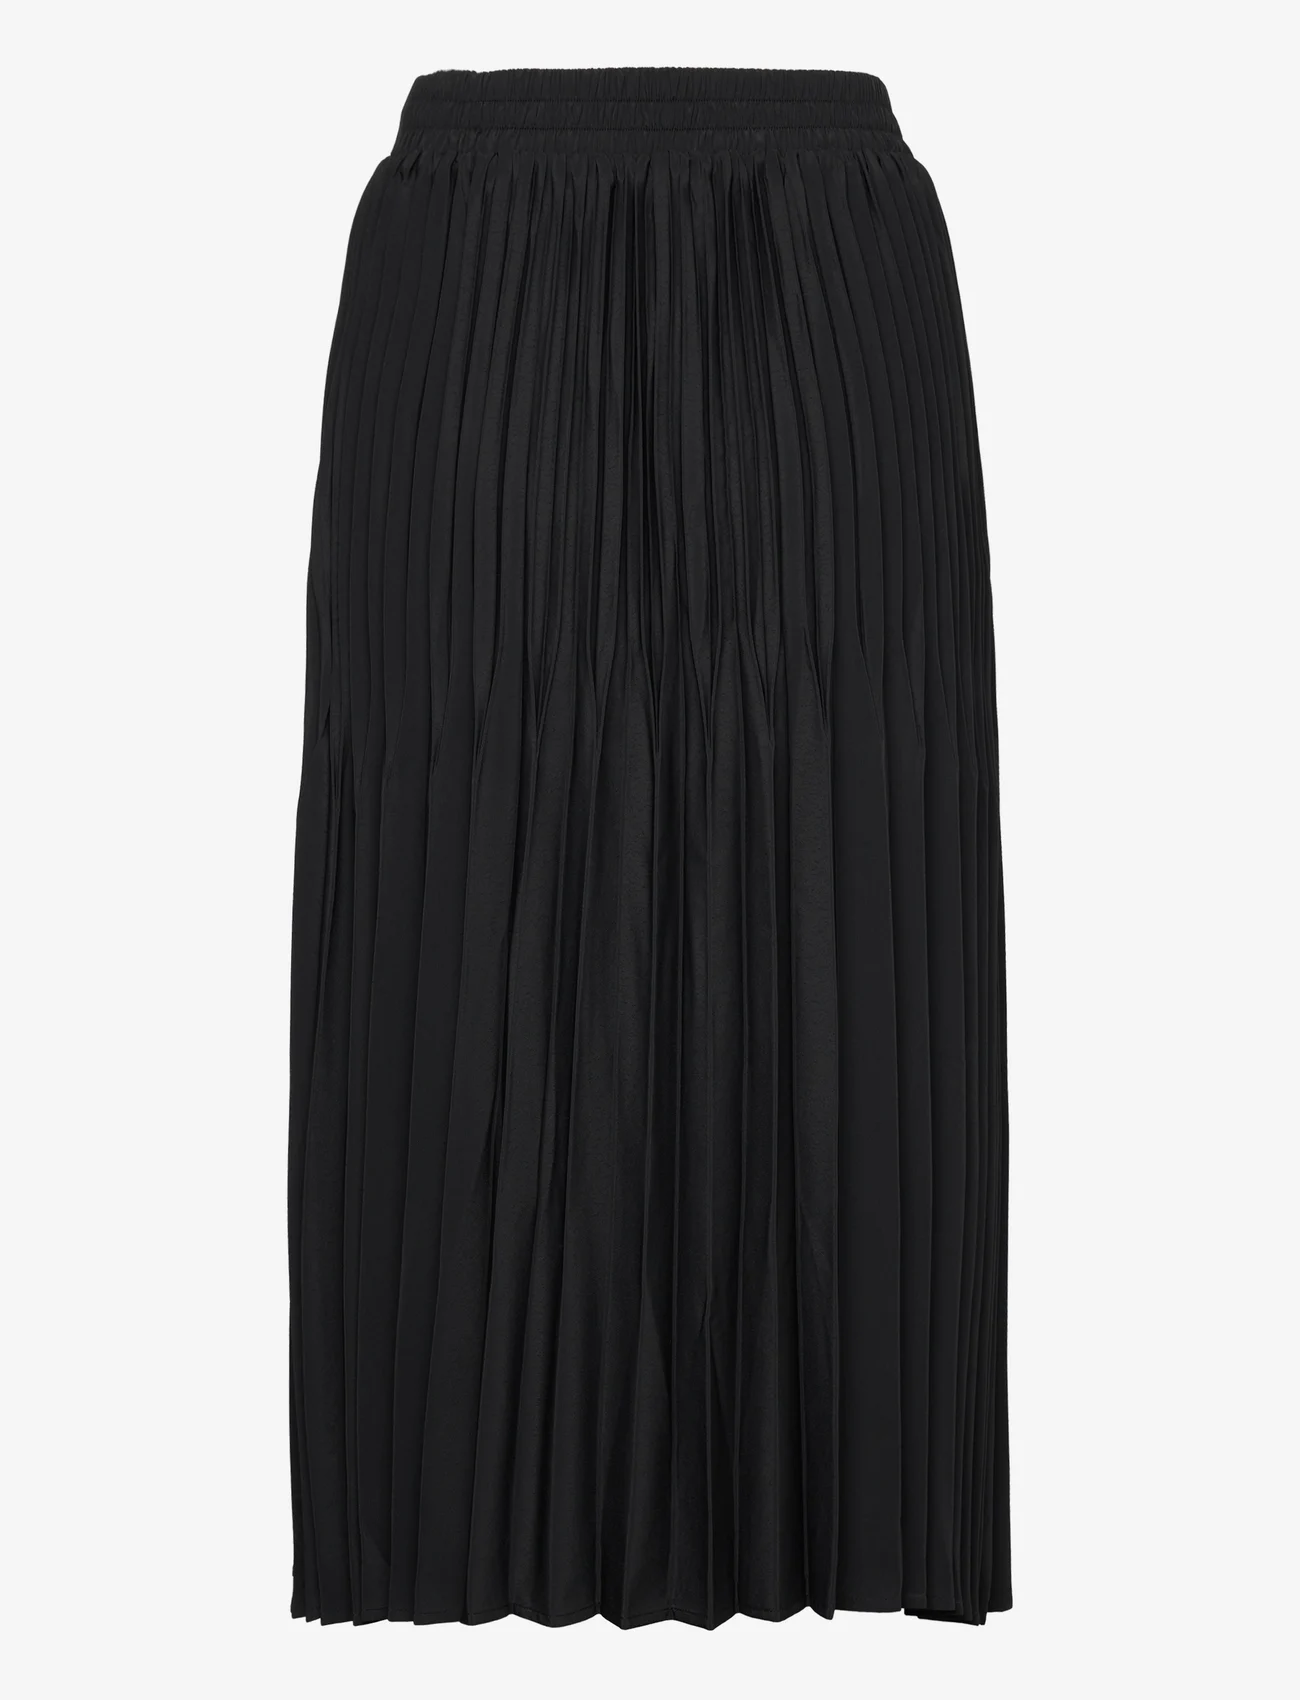 Culture - CUvienna Skirt - maxi skirts - black - 1